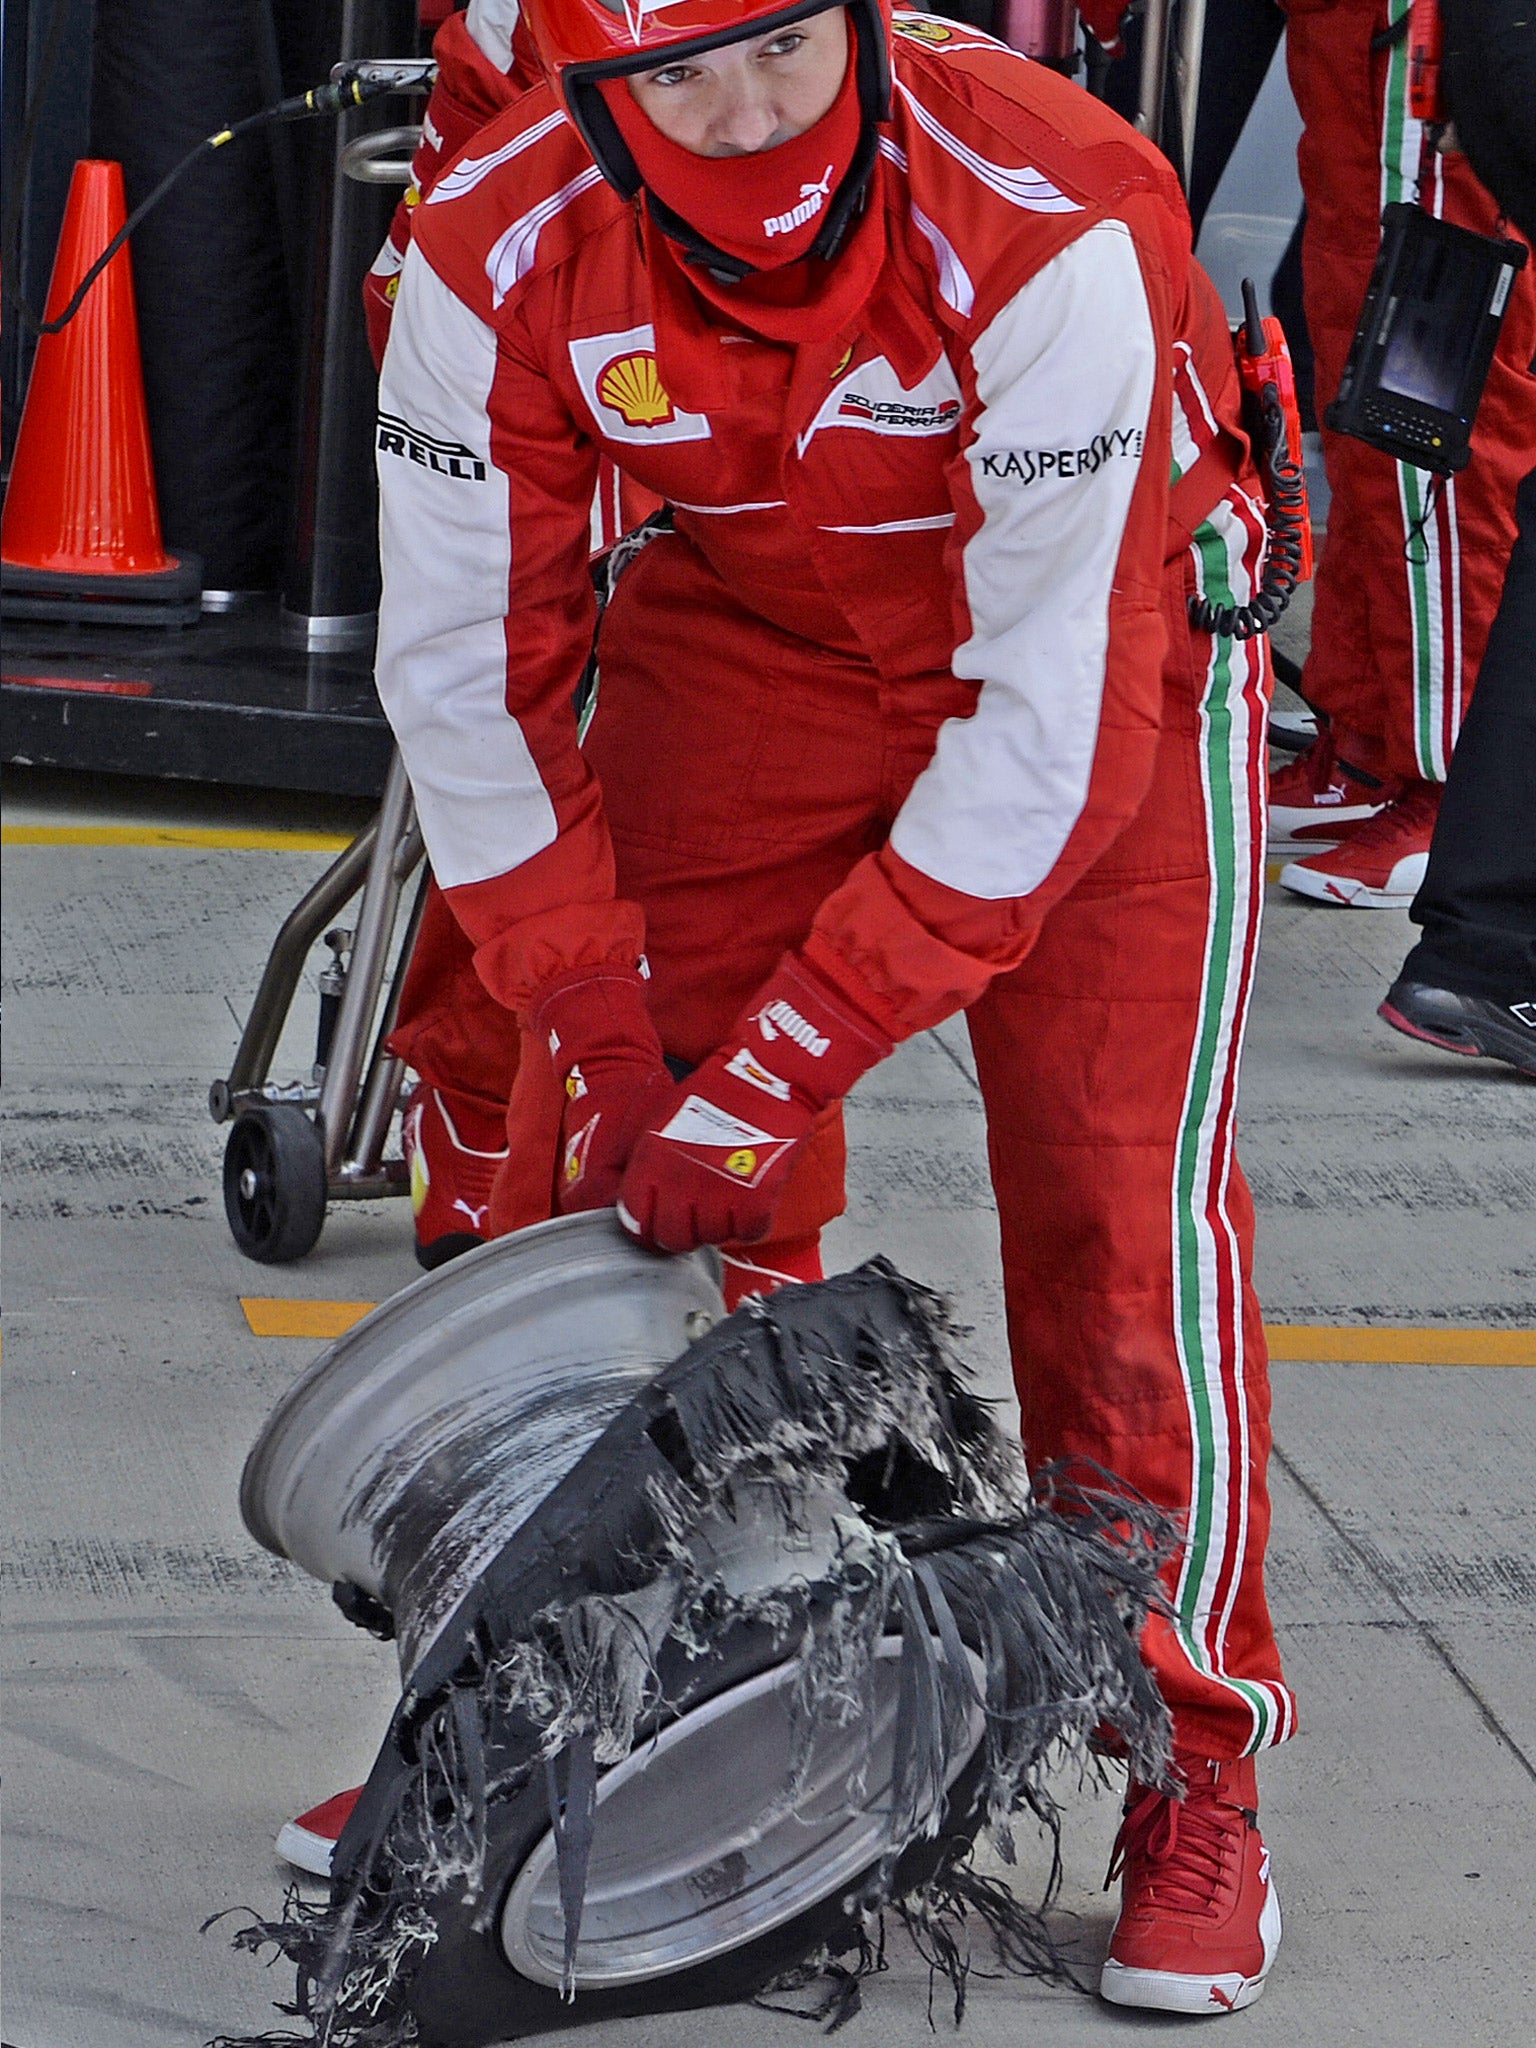 A Ferrari mechanic surveys the wreckage of Felipe Massa’s wheel